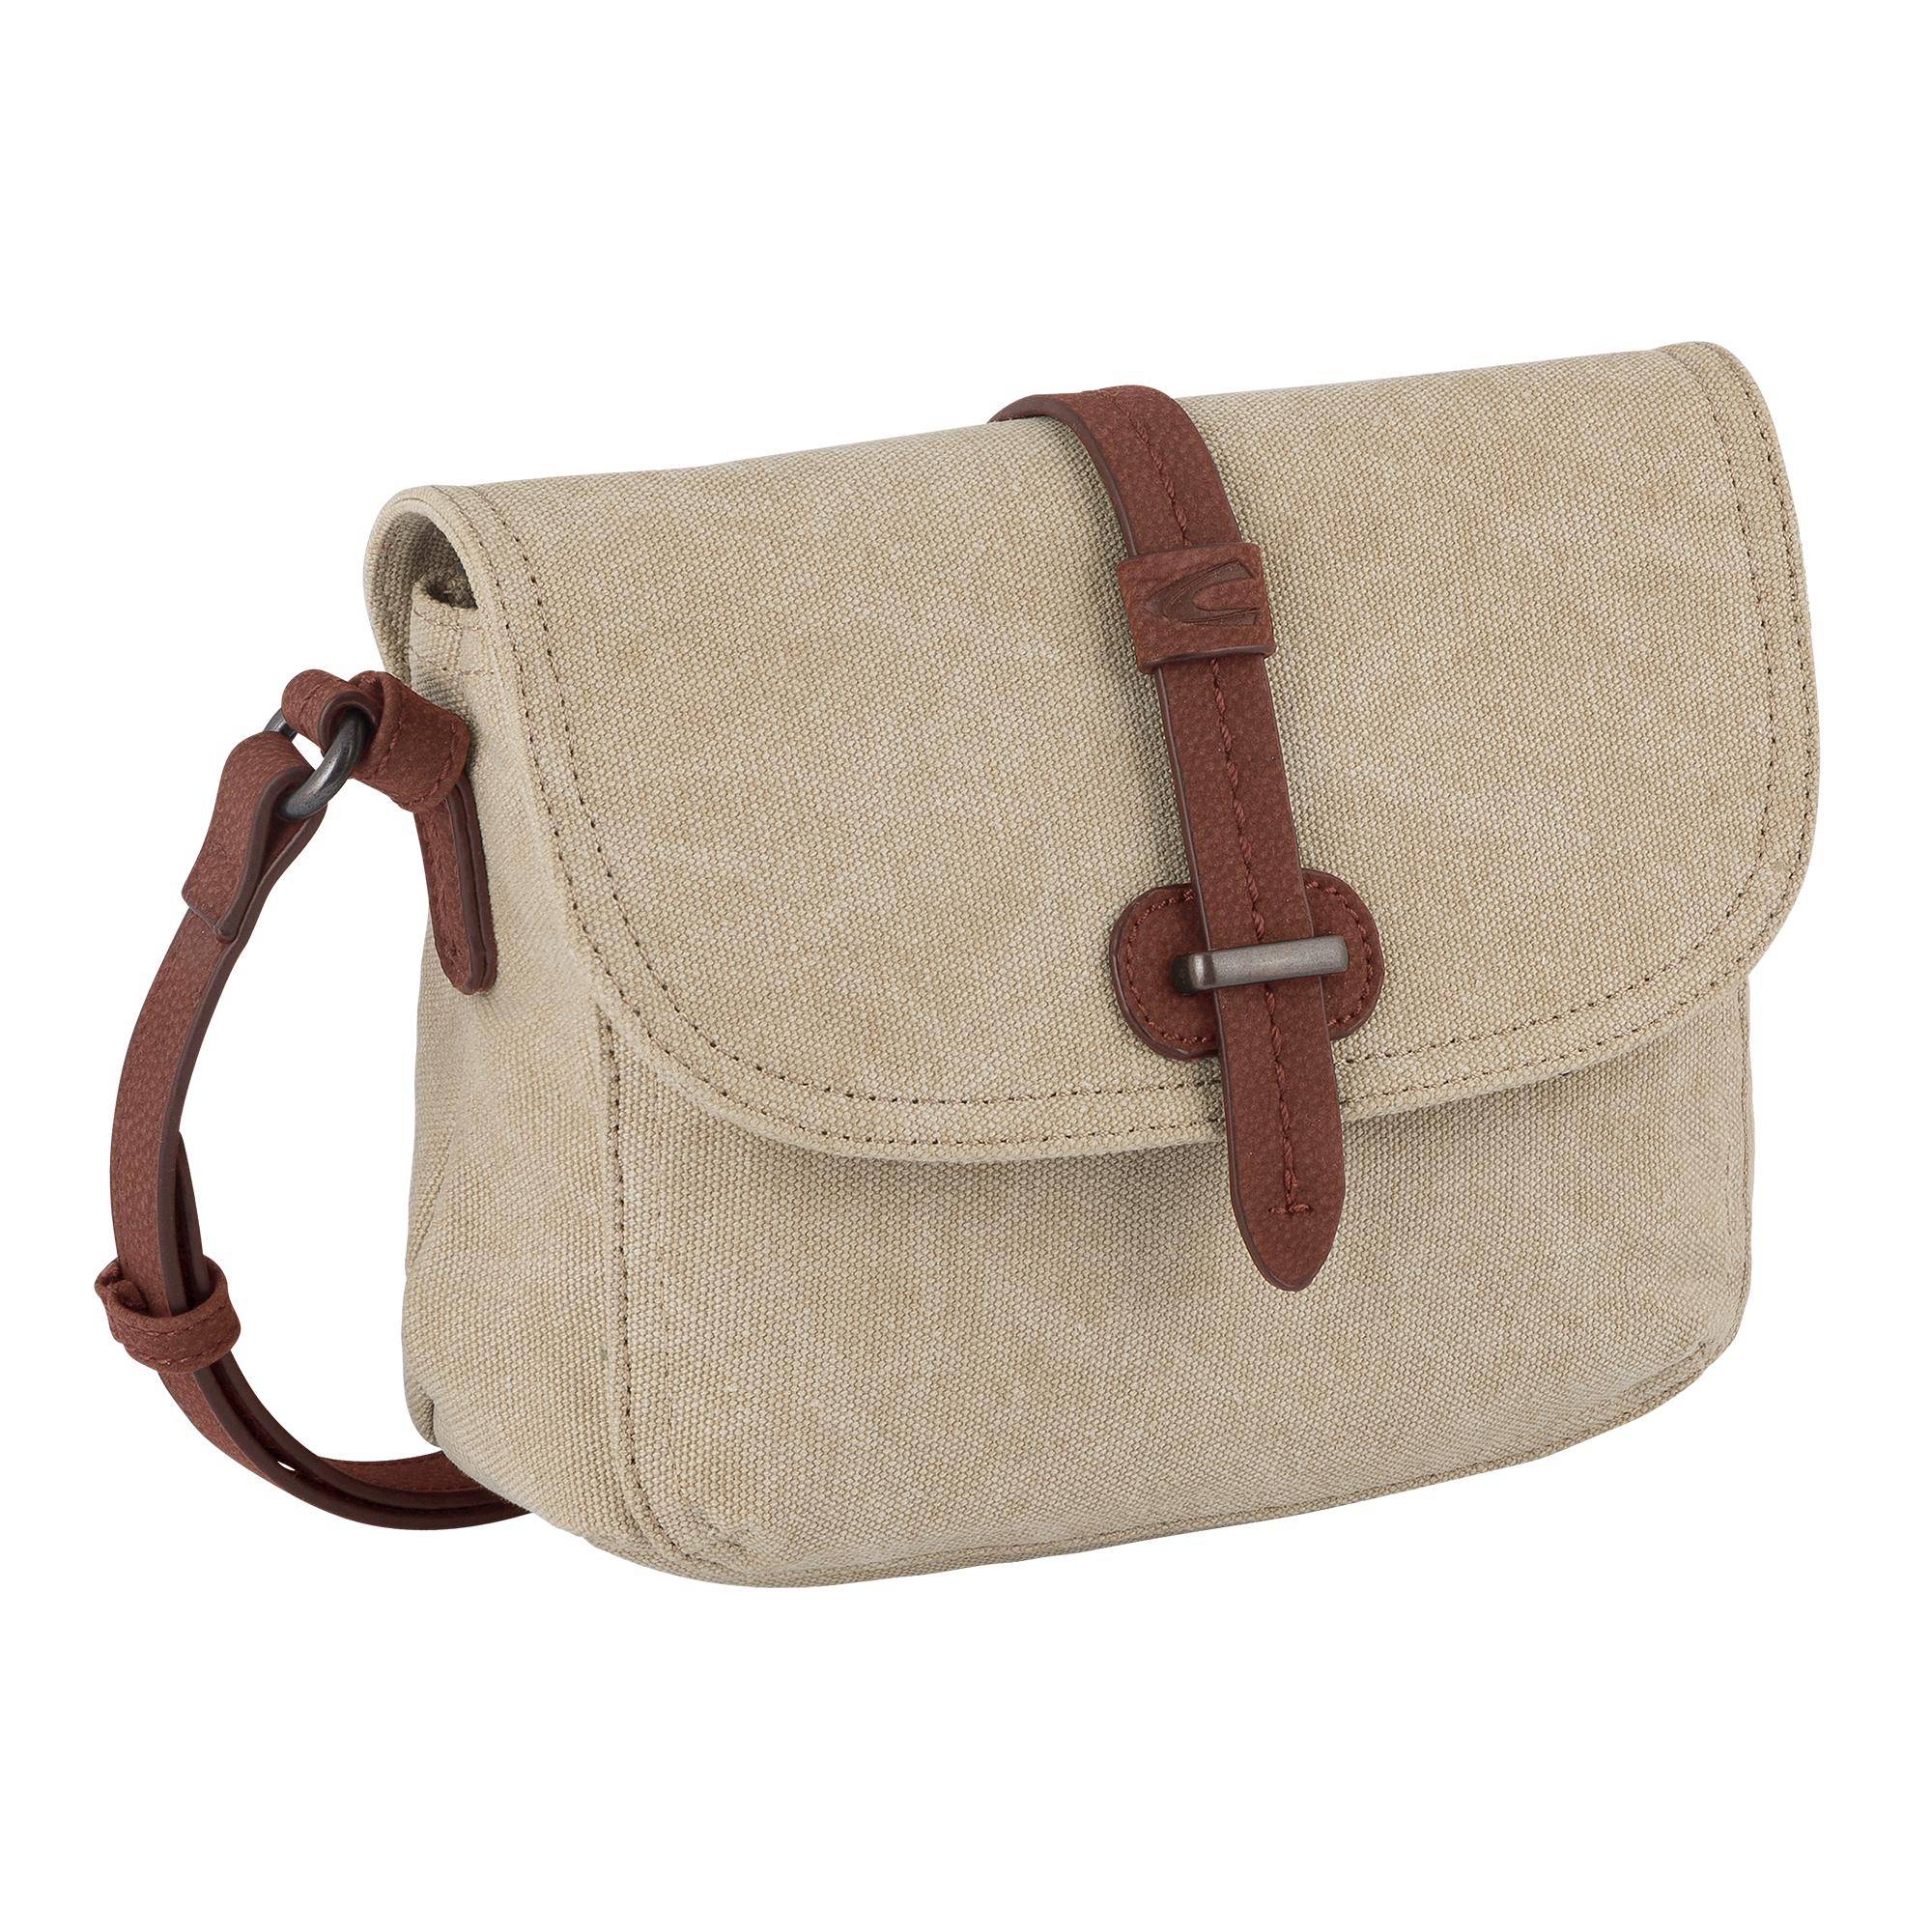 Женская сумка Camel Active bags, бежевая, цвет бежевый, размер ONE SIZE - фото 1